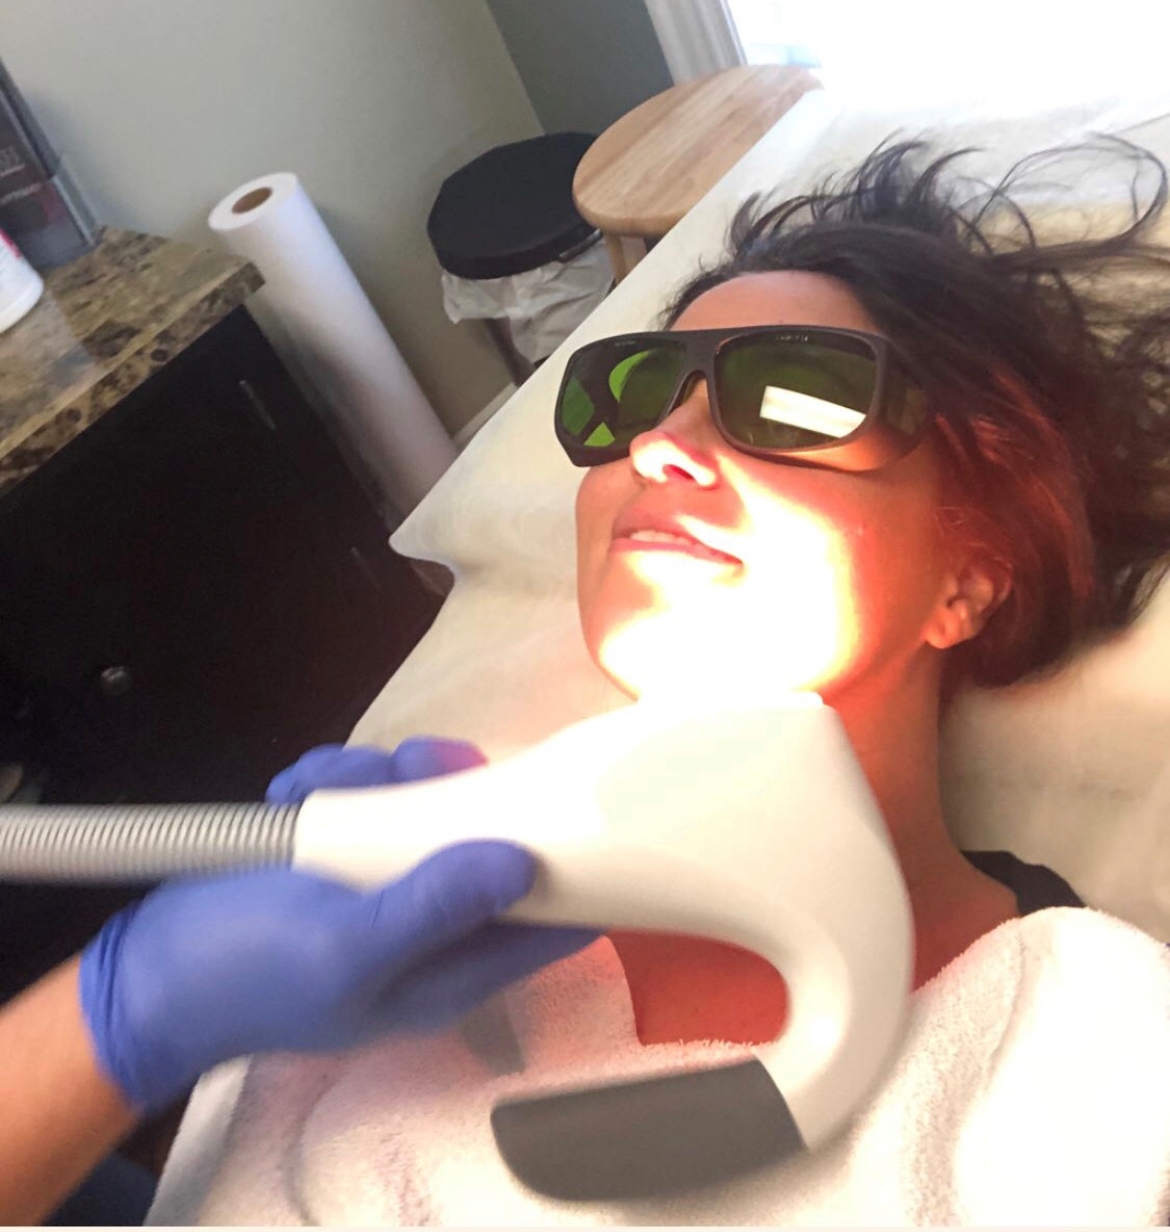 Kathy getting receiving a facial procedure